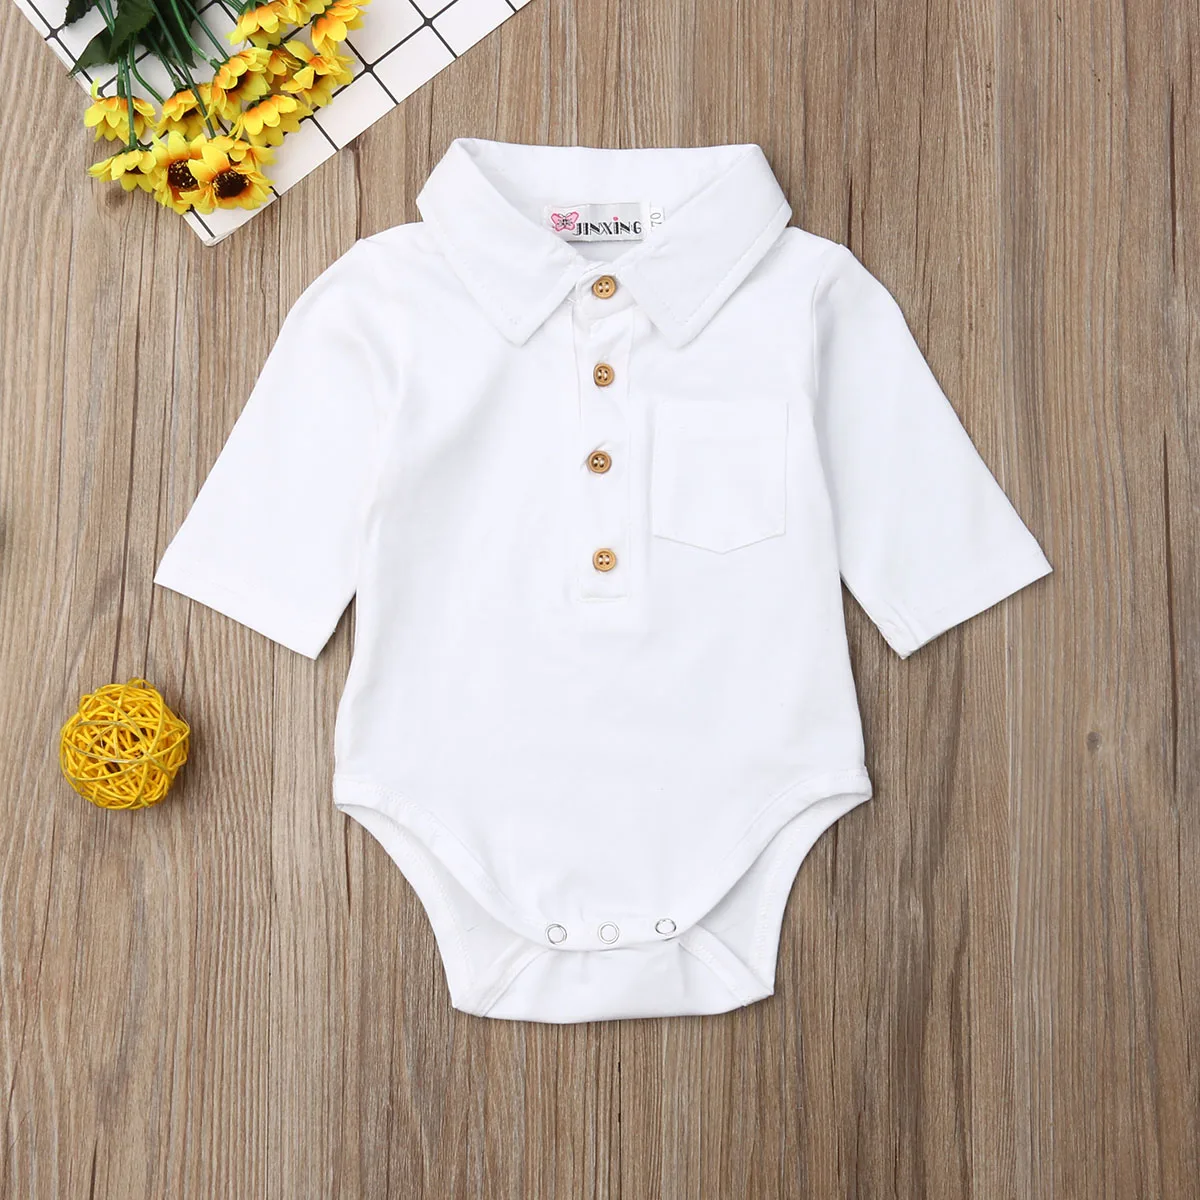 

Pudcoco Newborn Baby Boy Clothes Solid Color Long Sleeve Cotton Romper Jumpsuit One-Piece Outfit Sunsuit Summer Clothes